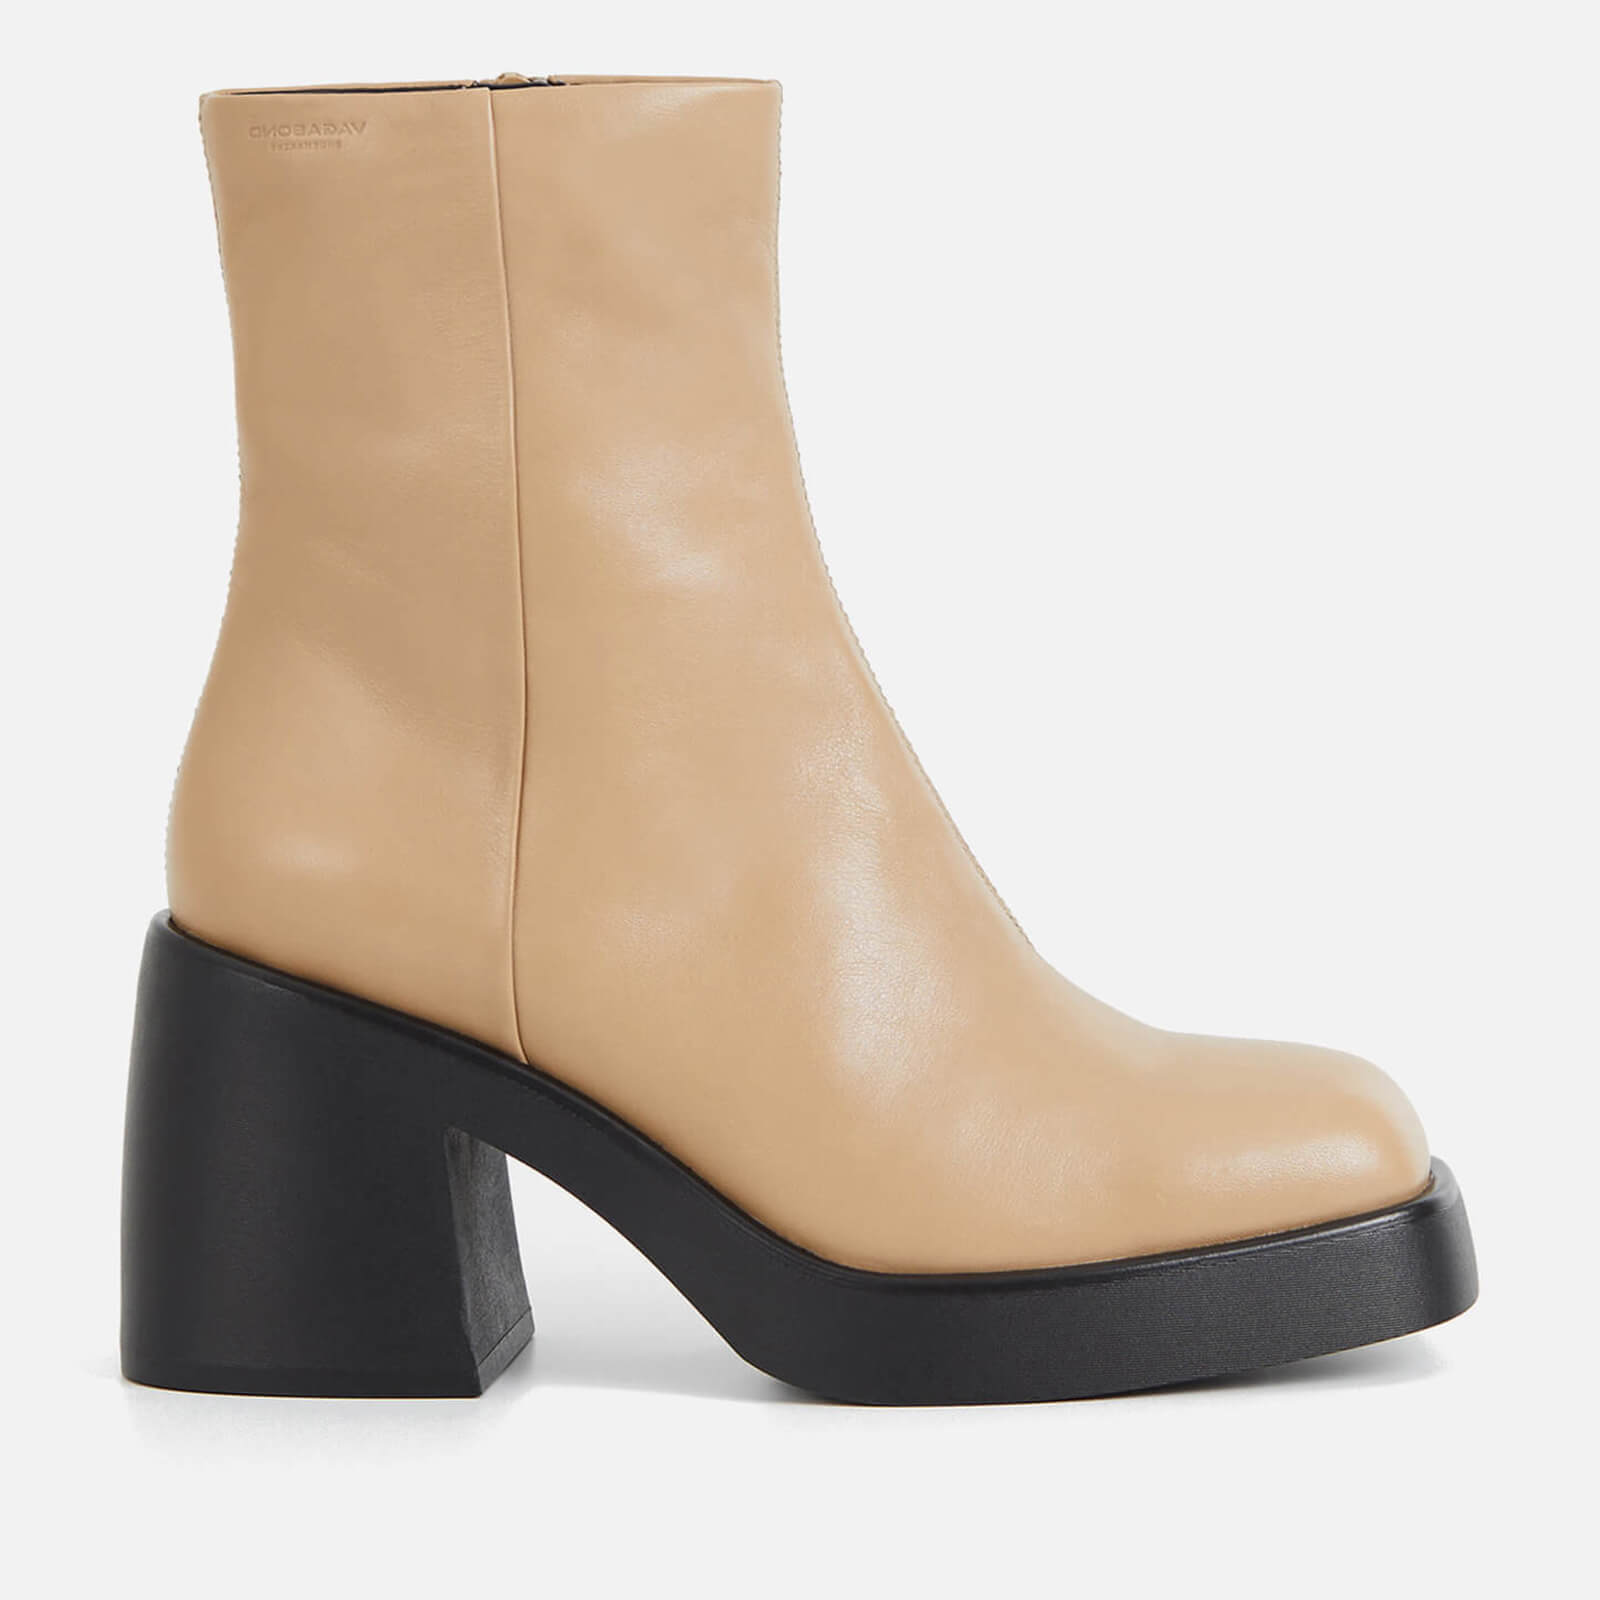 Vagabond Women’s Brooke Leather Heeled Boots